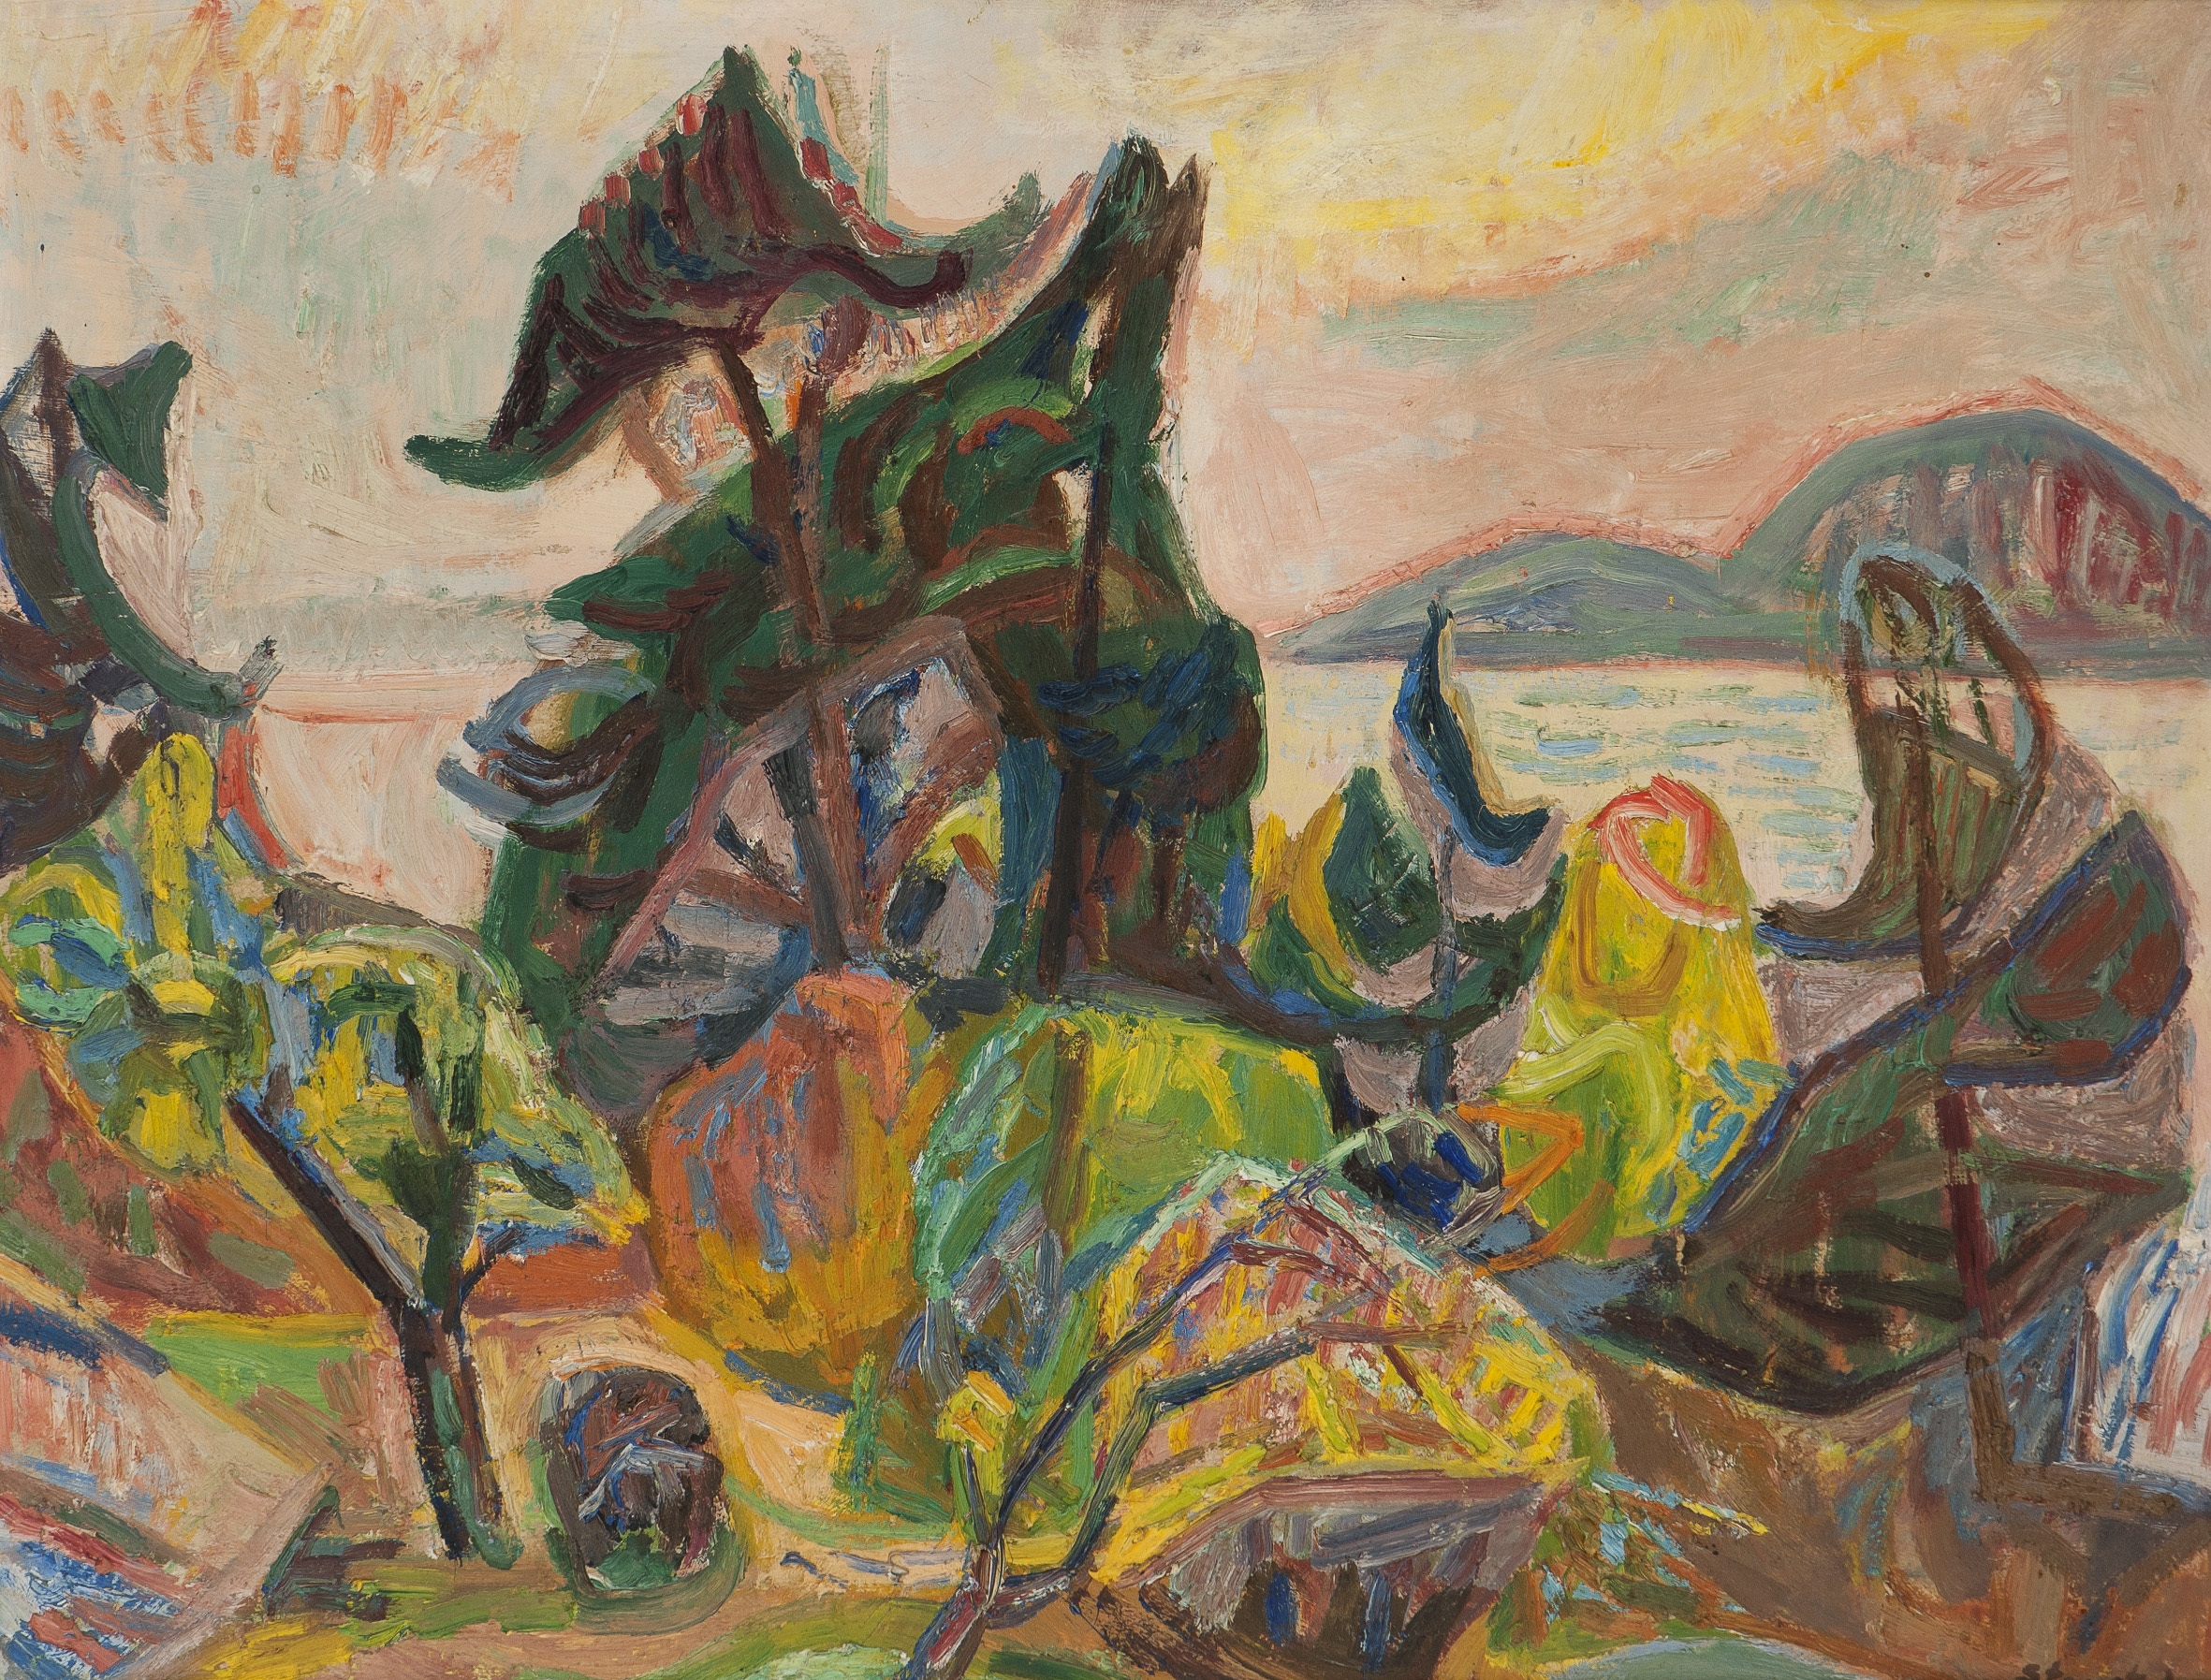 Verandautsikt, Holmsbu by Aage Storstein, 1944